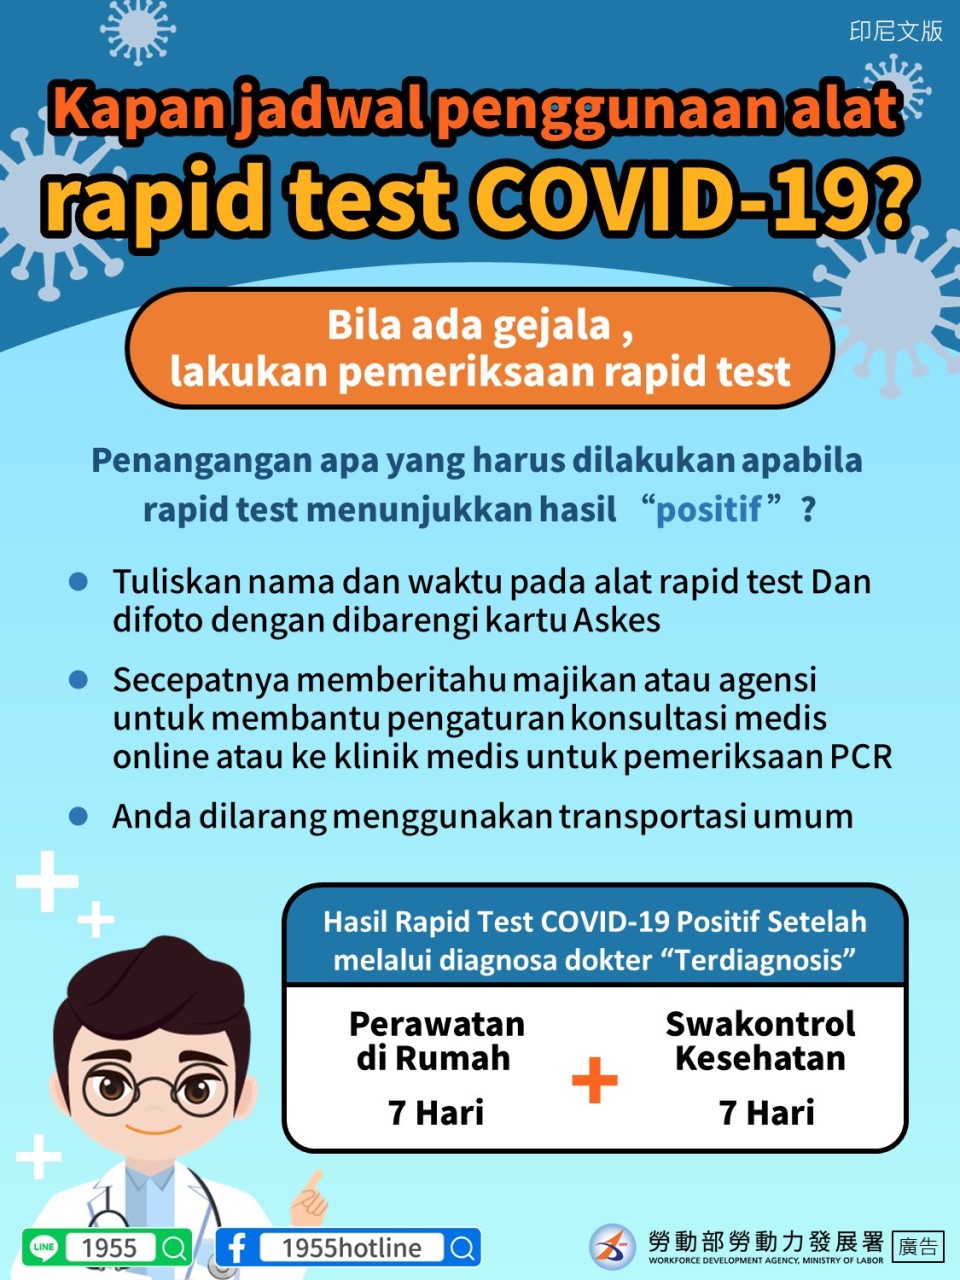 Kapan Jadwal Penggunaan Alat Rapid Test COVID-19?